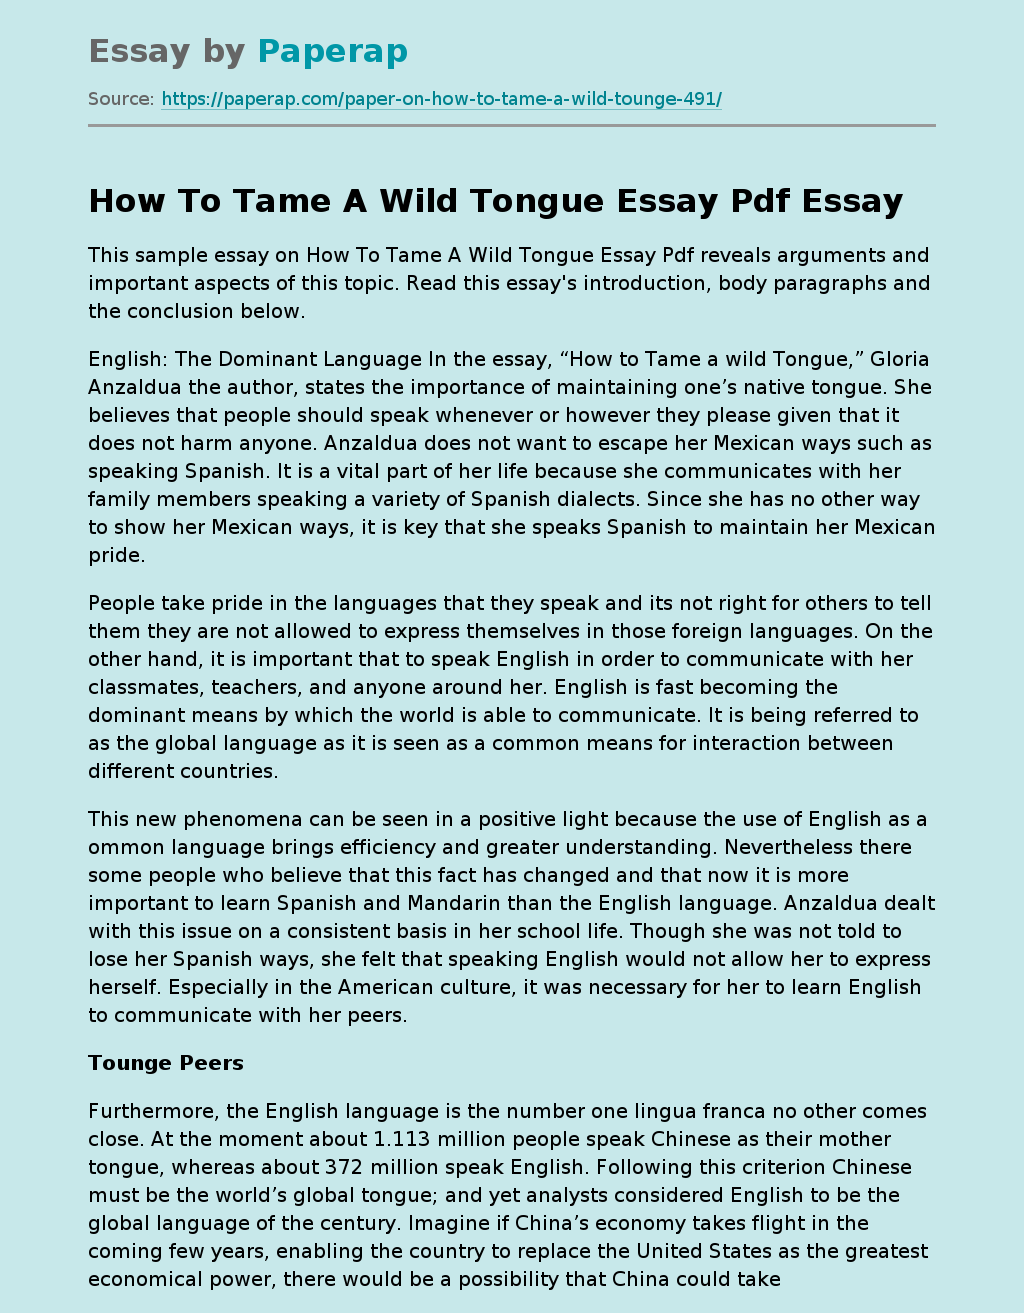 How To Tame A Wild Tongue Essay Pdf